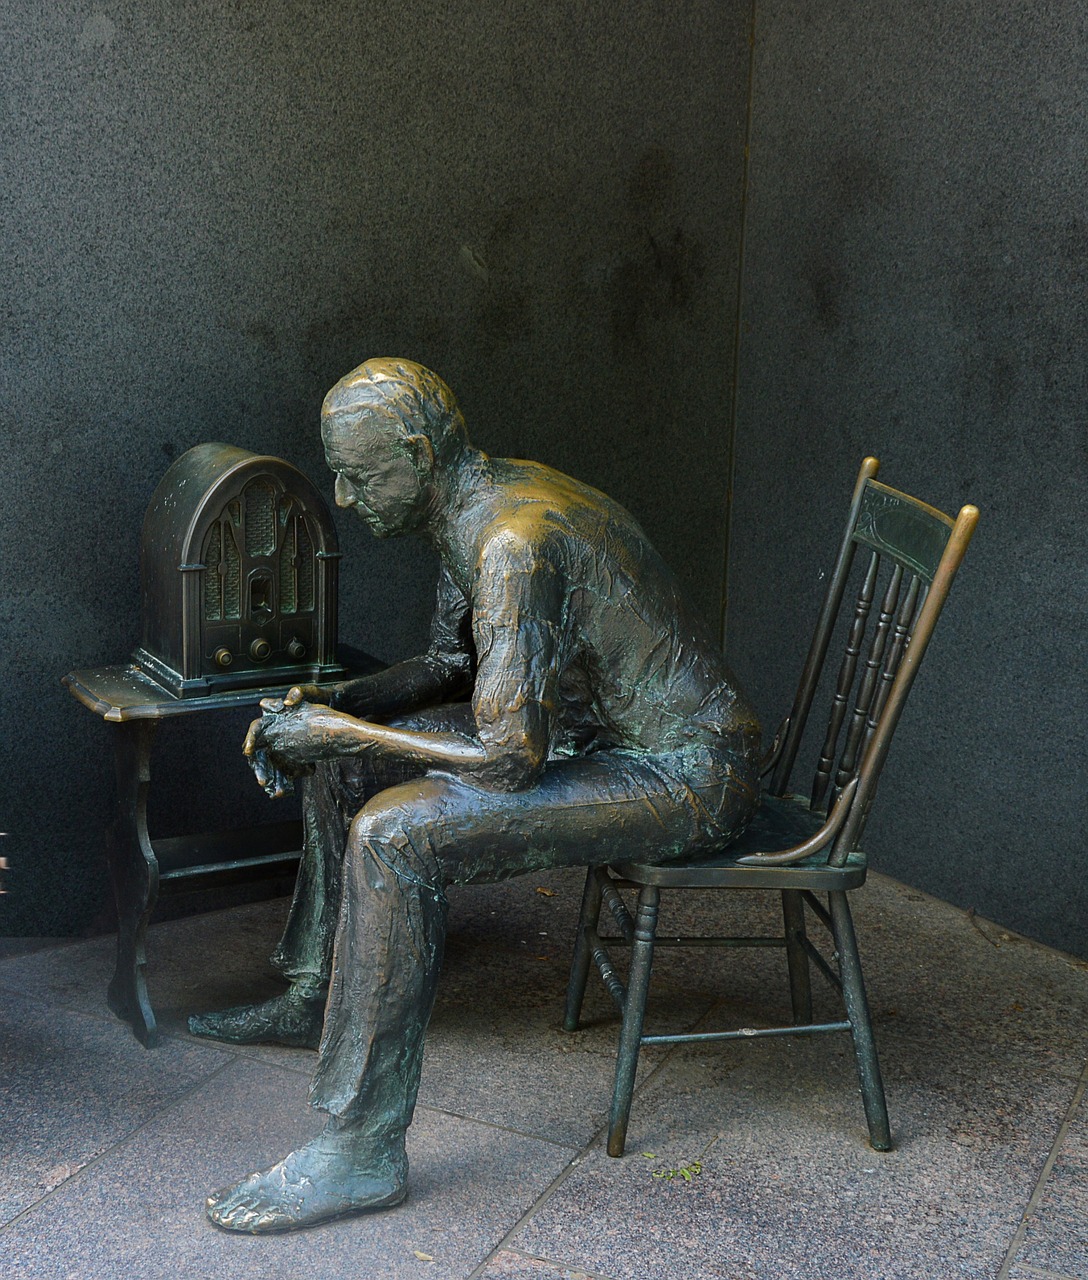 Image - statue man sitting chair